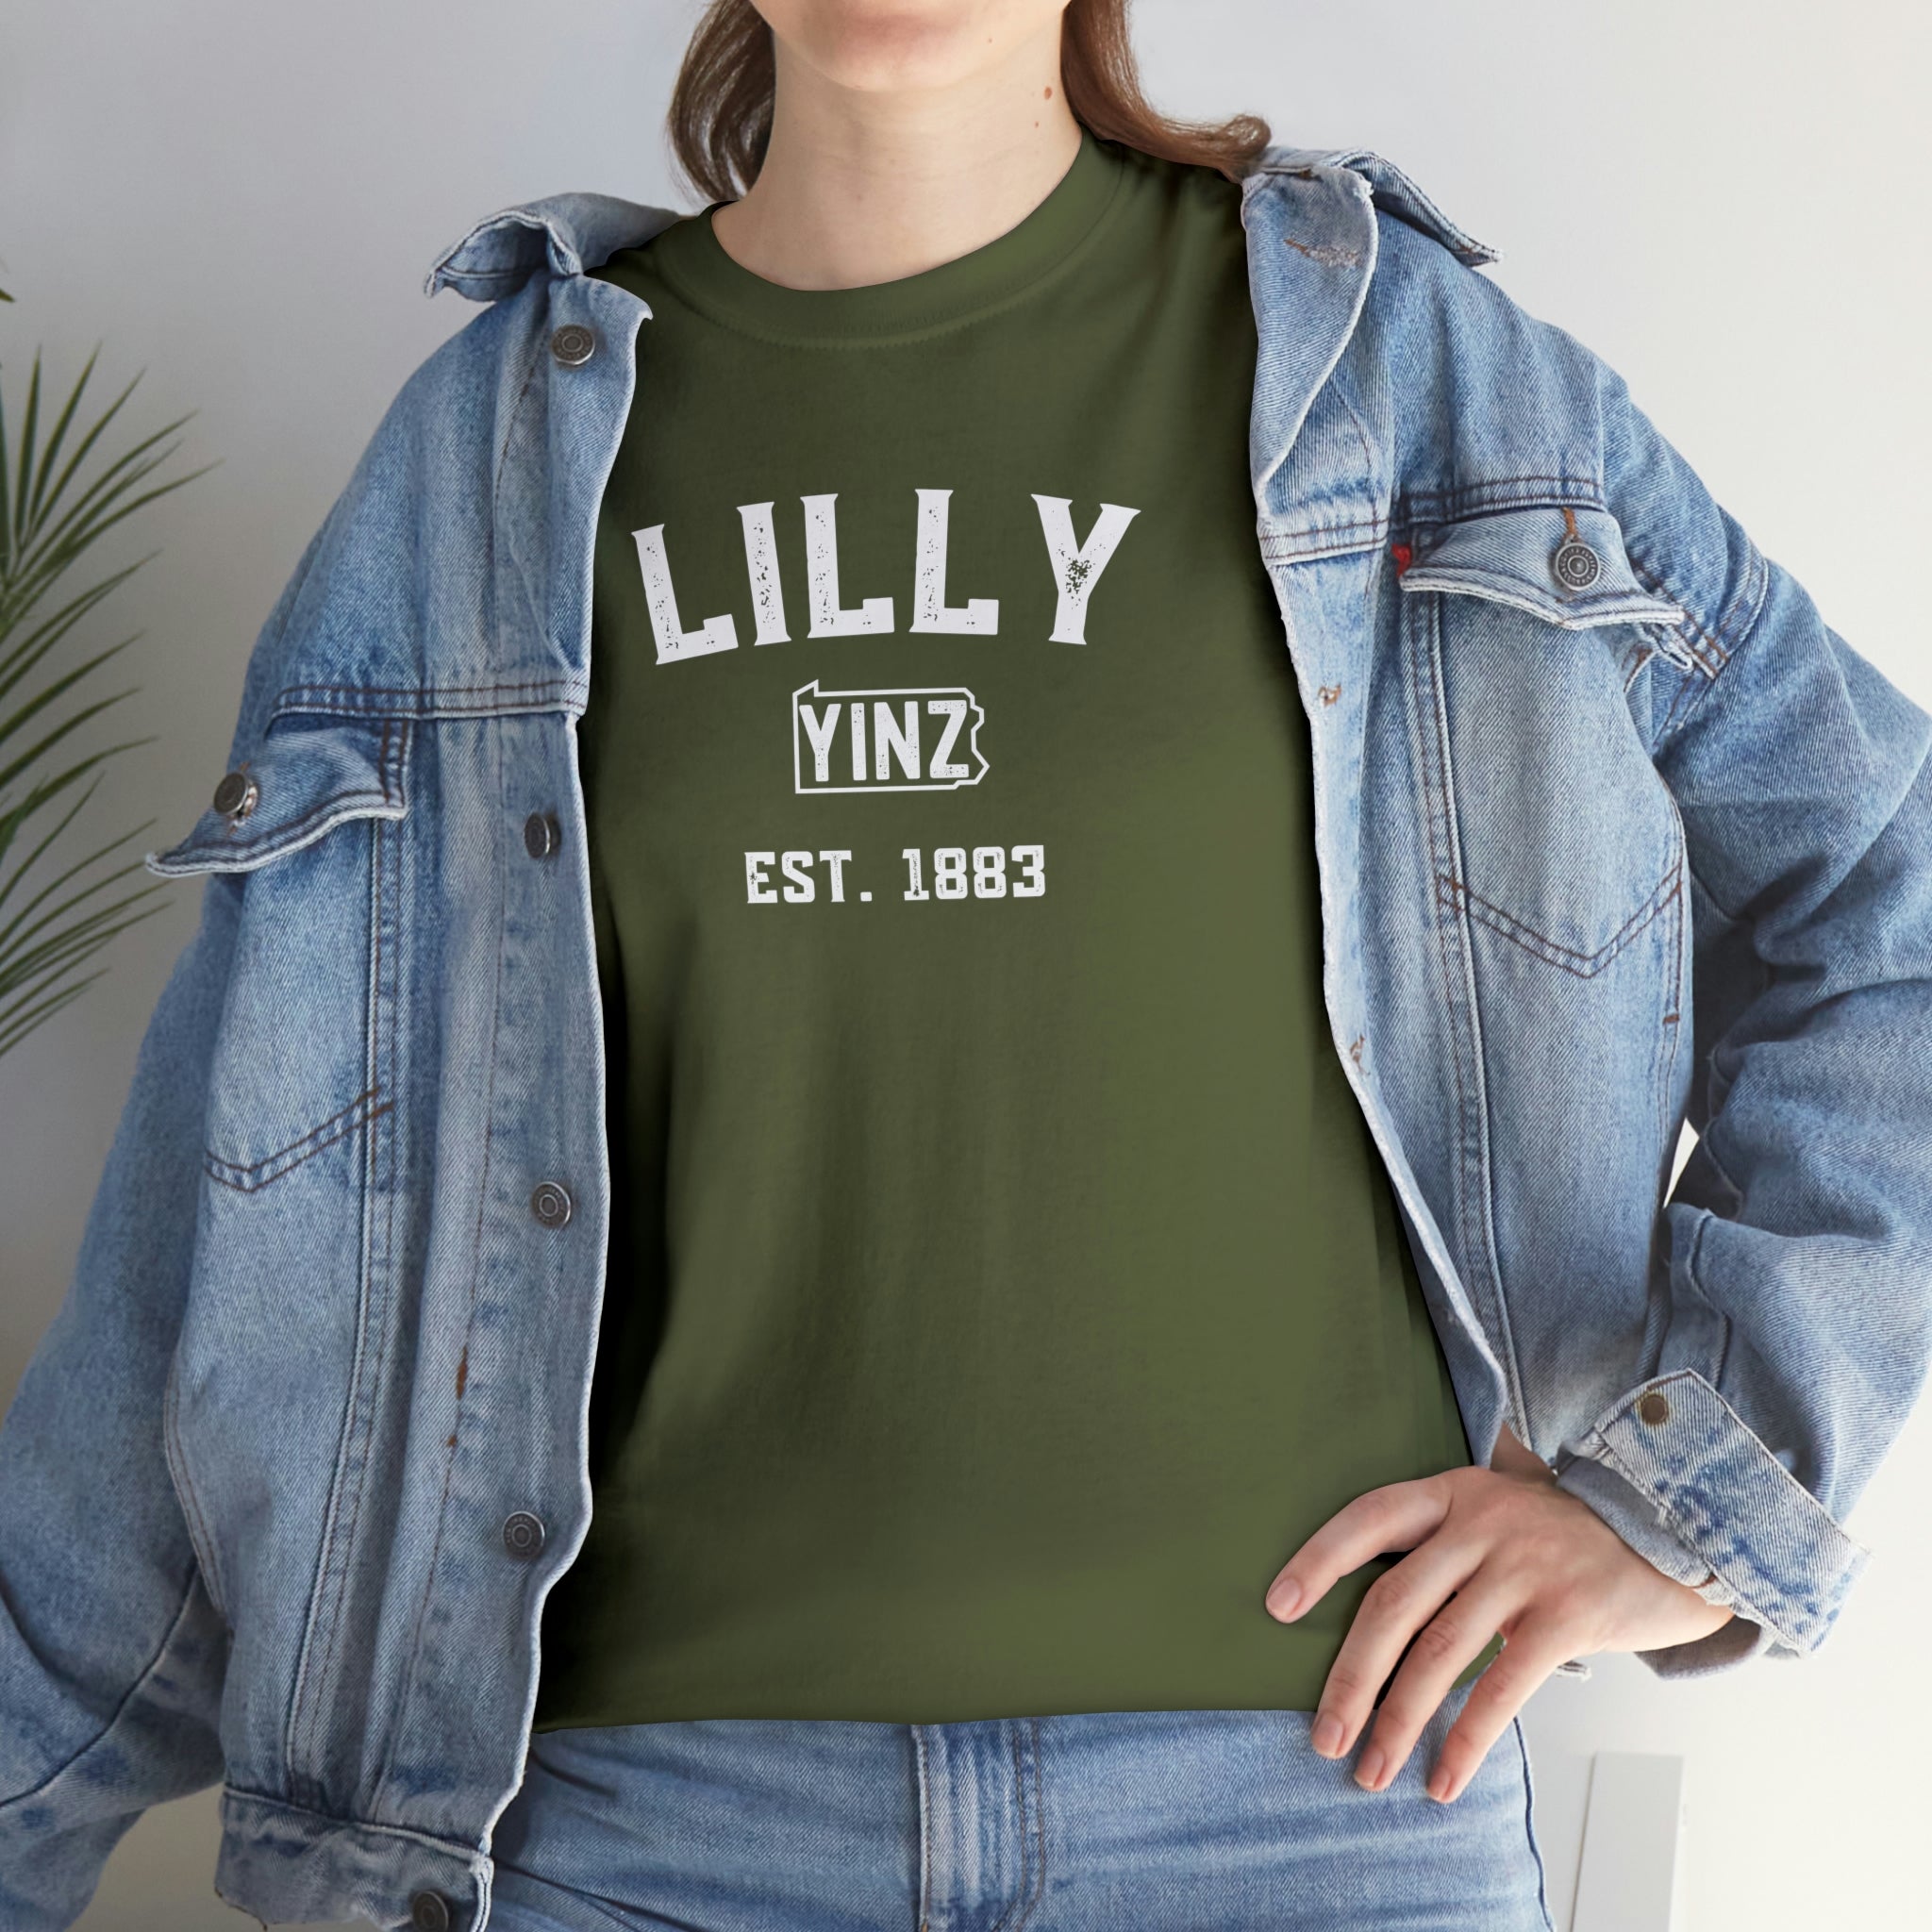 Lilly Yinzylvania - Big & Tall Tee - Yinzylvania